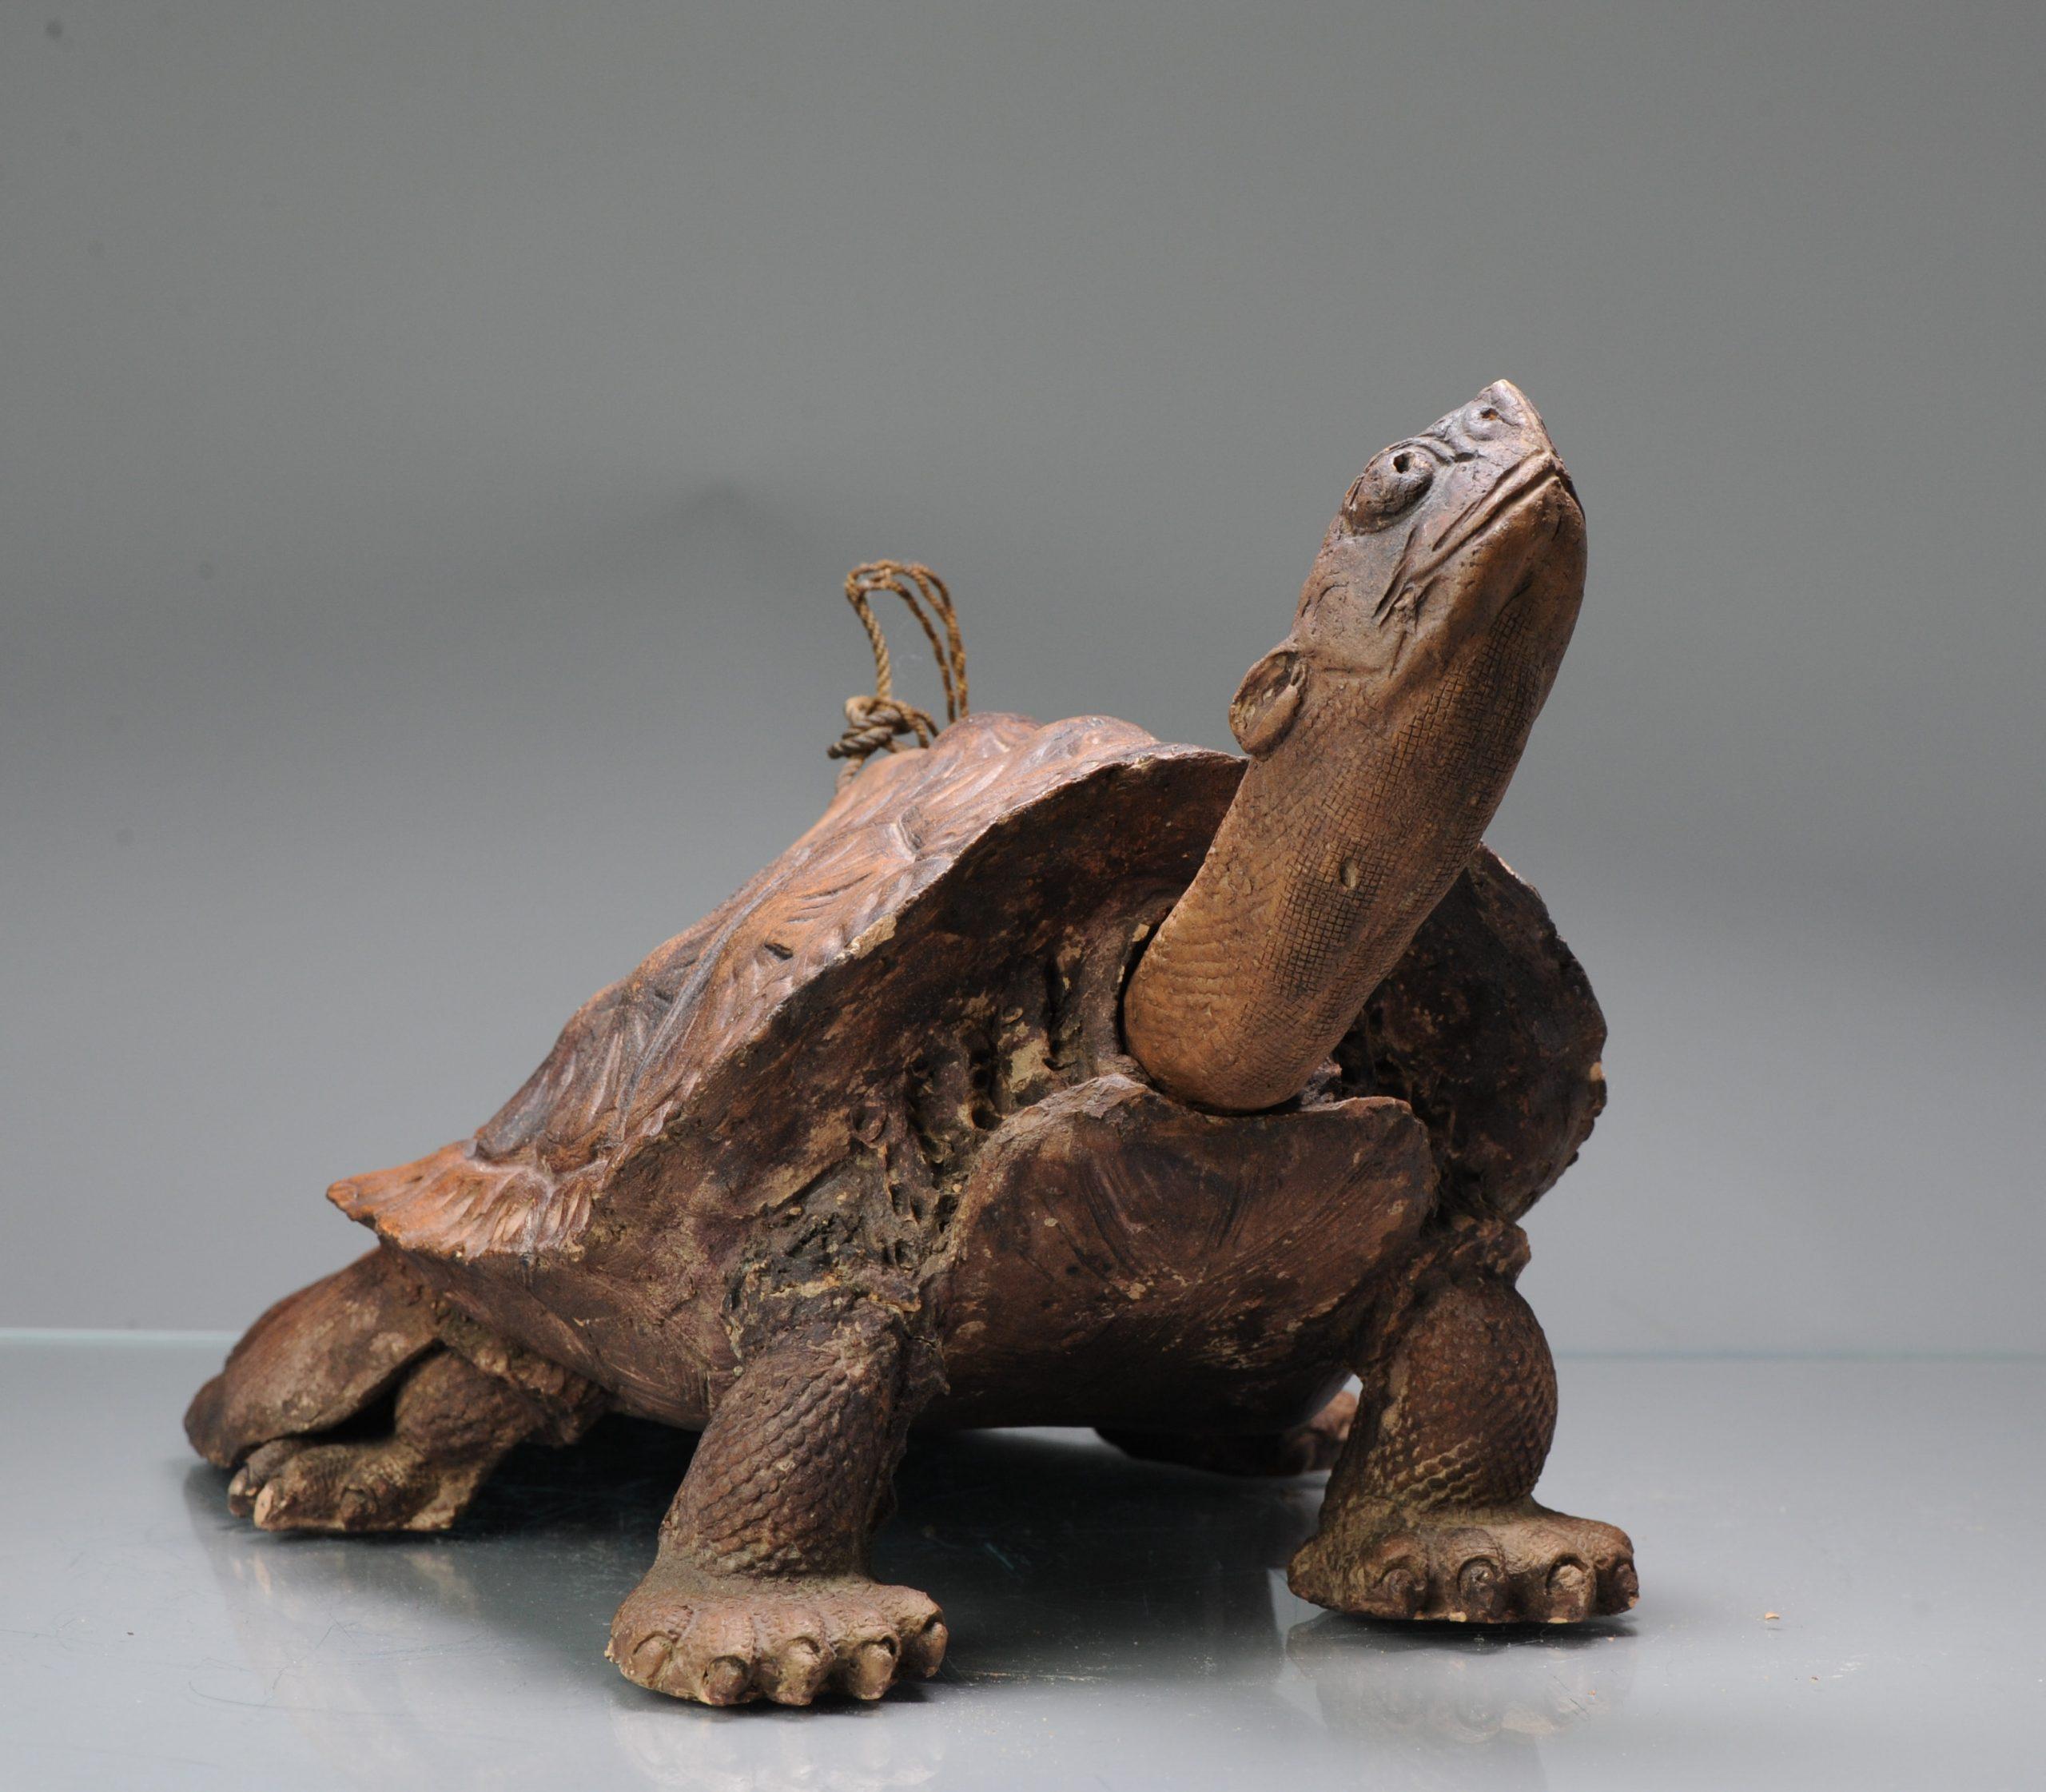 Antique Iwayaki Earthenware Edo Incense Burner of a Turtle 19th Century Japan For Sale 4